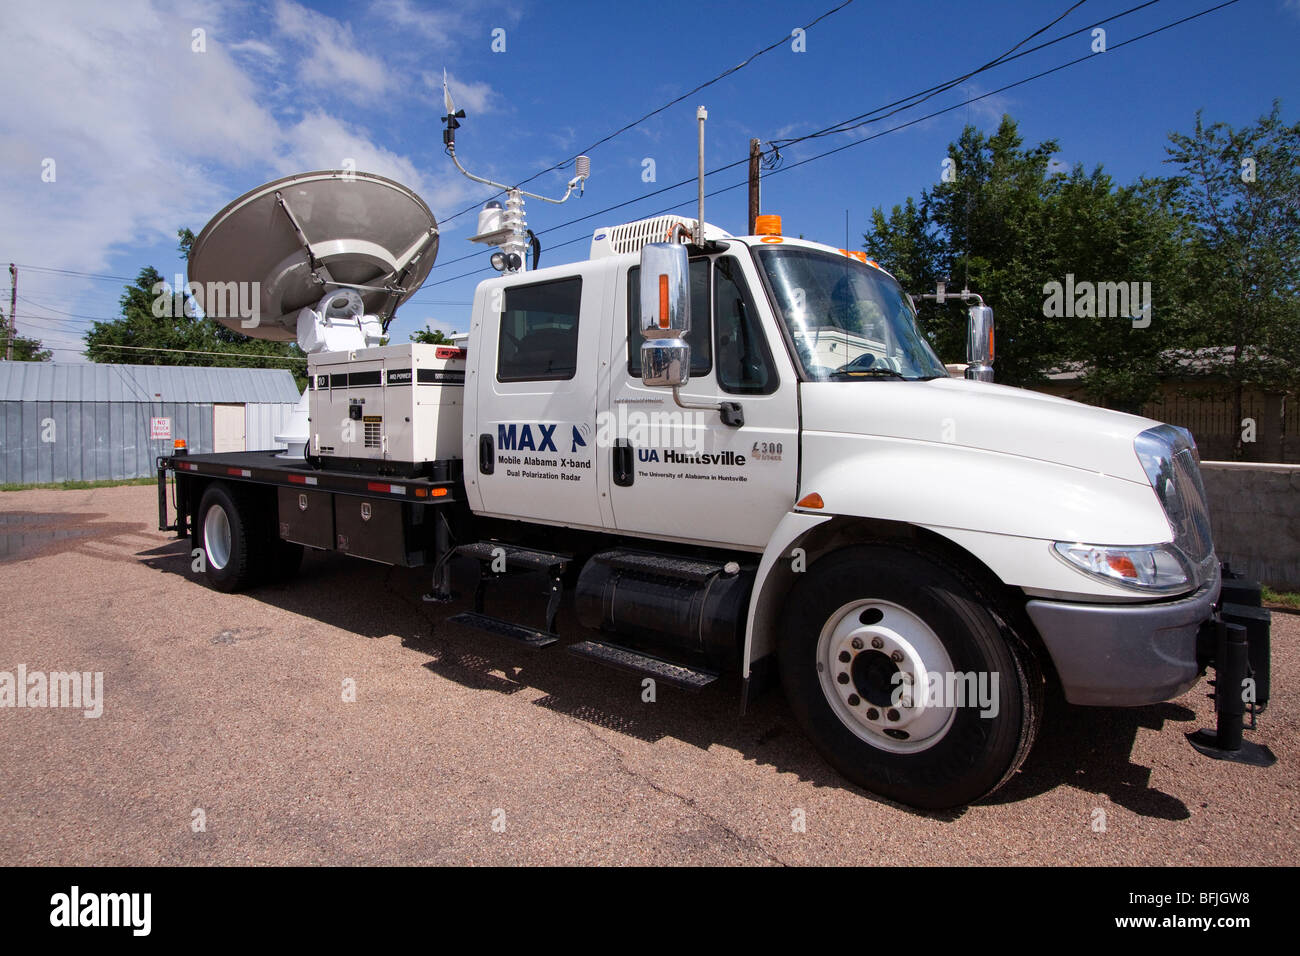 A mobile doppler radar truck from the University of Alabama. Stock Photo